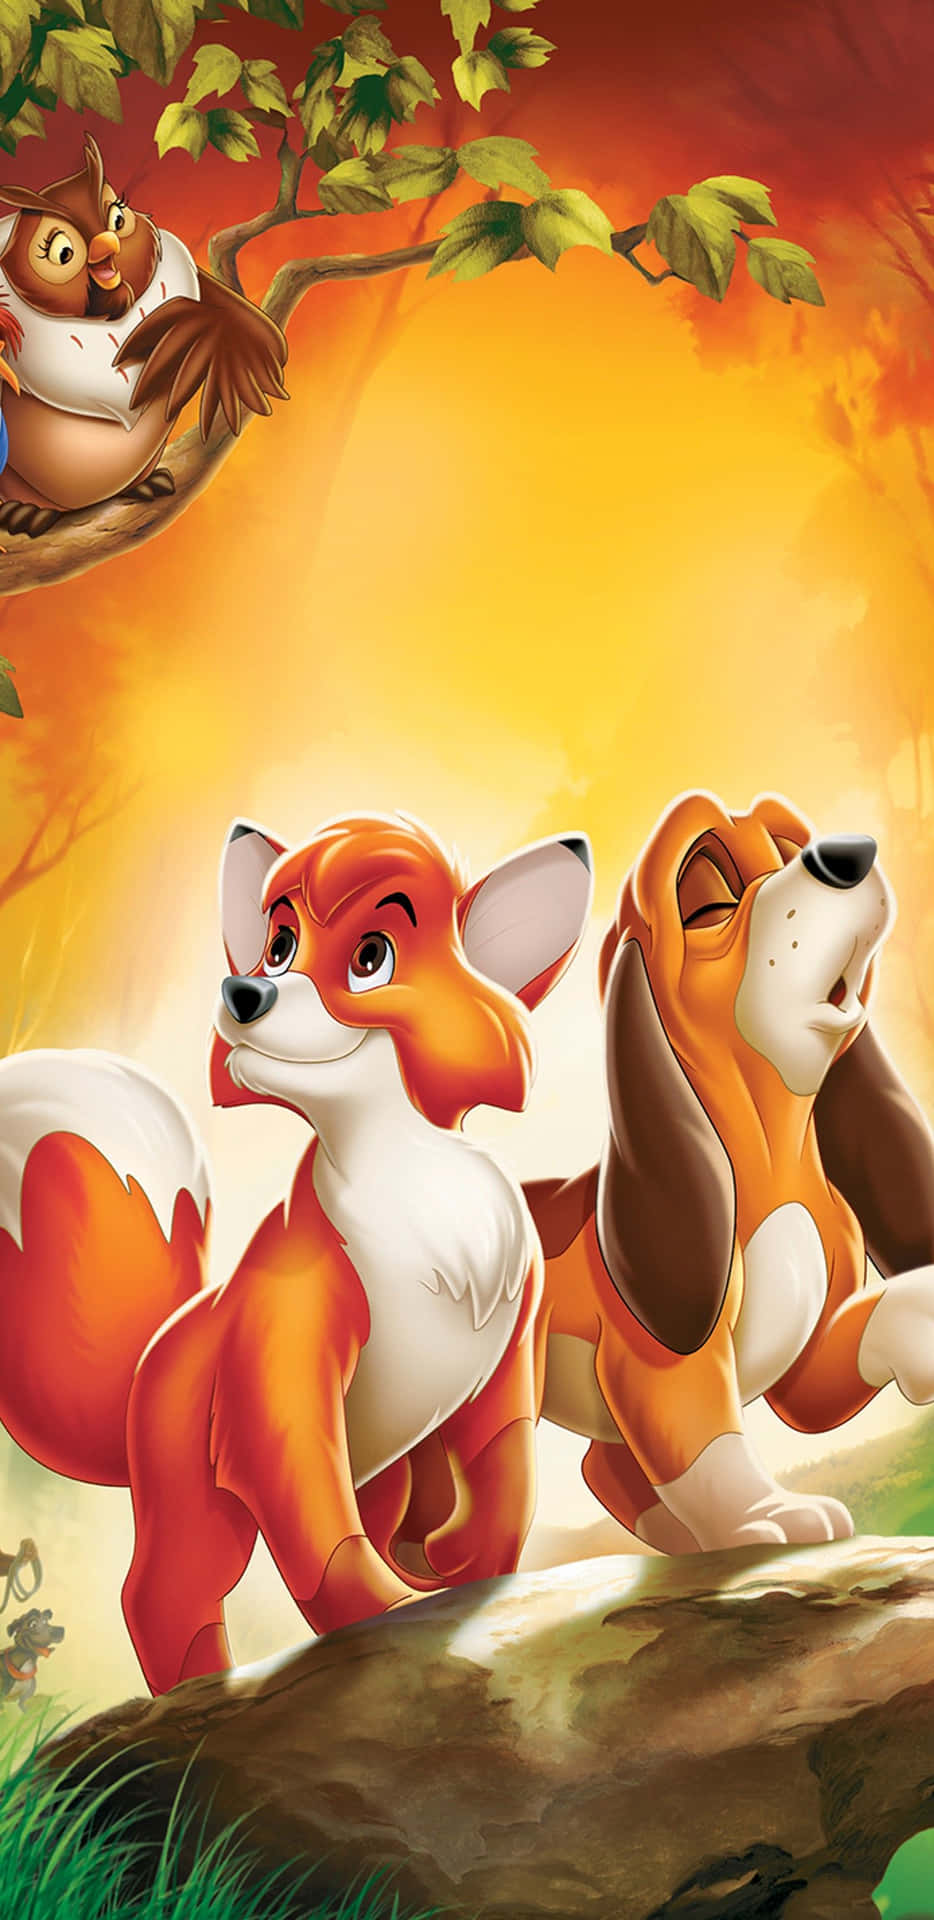 Fox and Hound - A Timeless Friendship Wallpaper